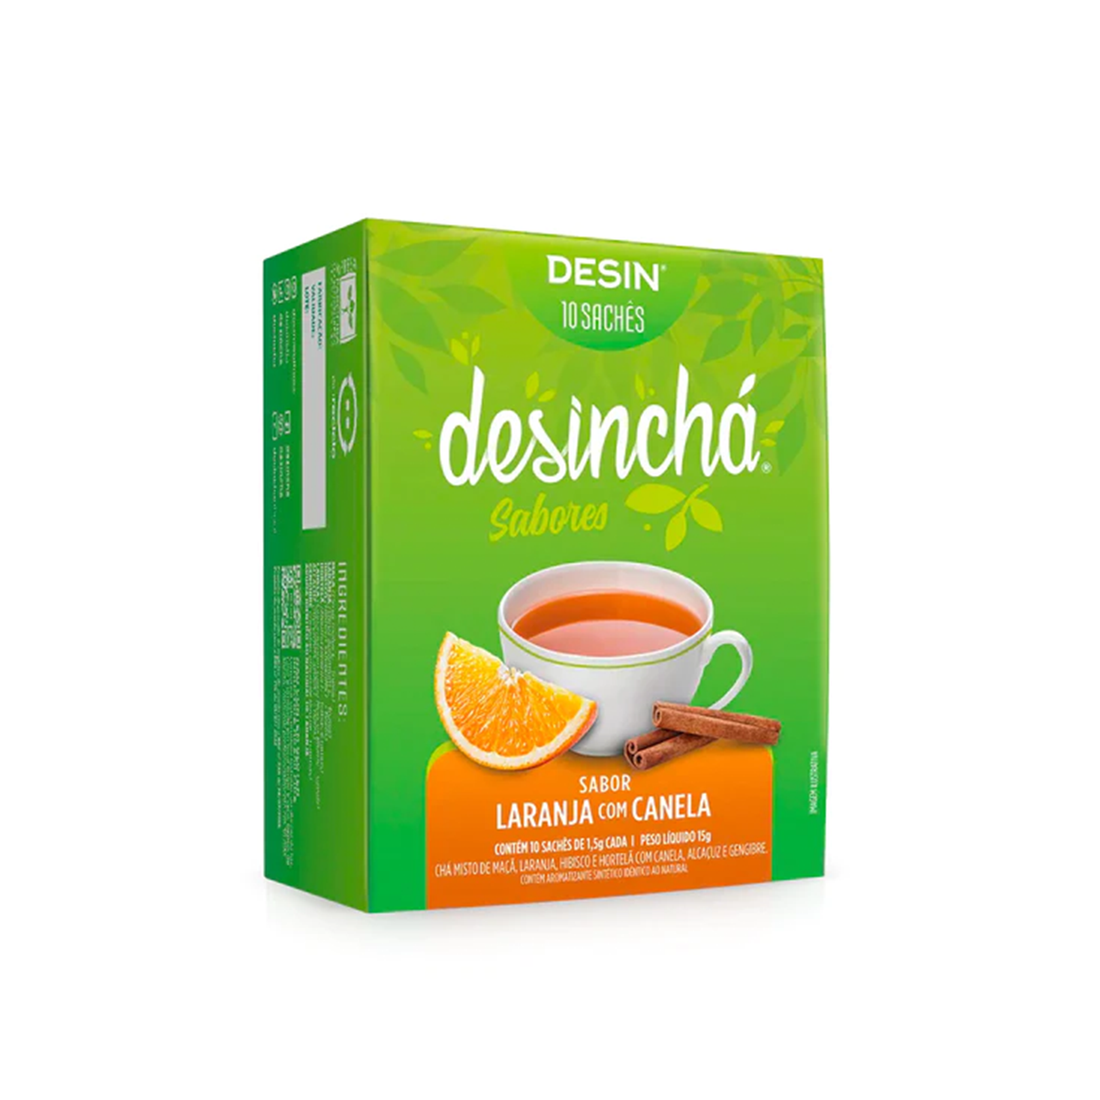 Desinchá Orange and Cinnamon Flavor Tea 10 bags